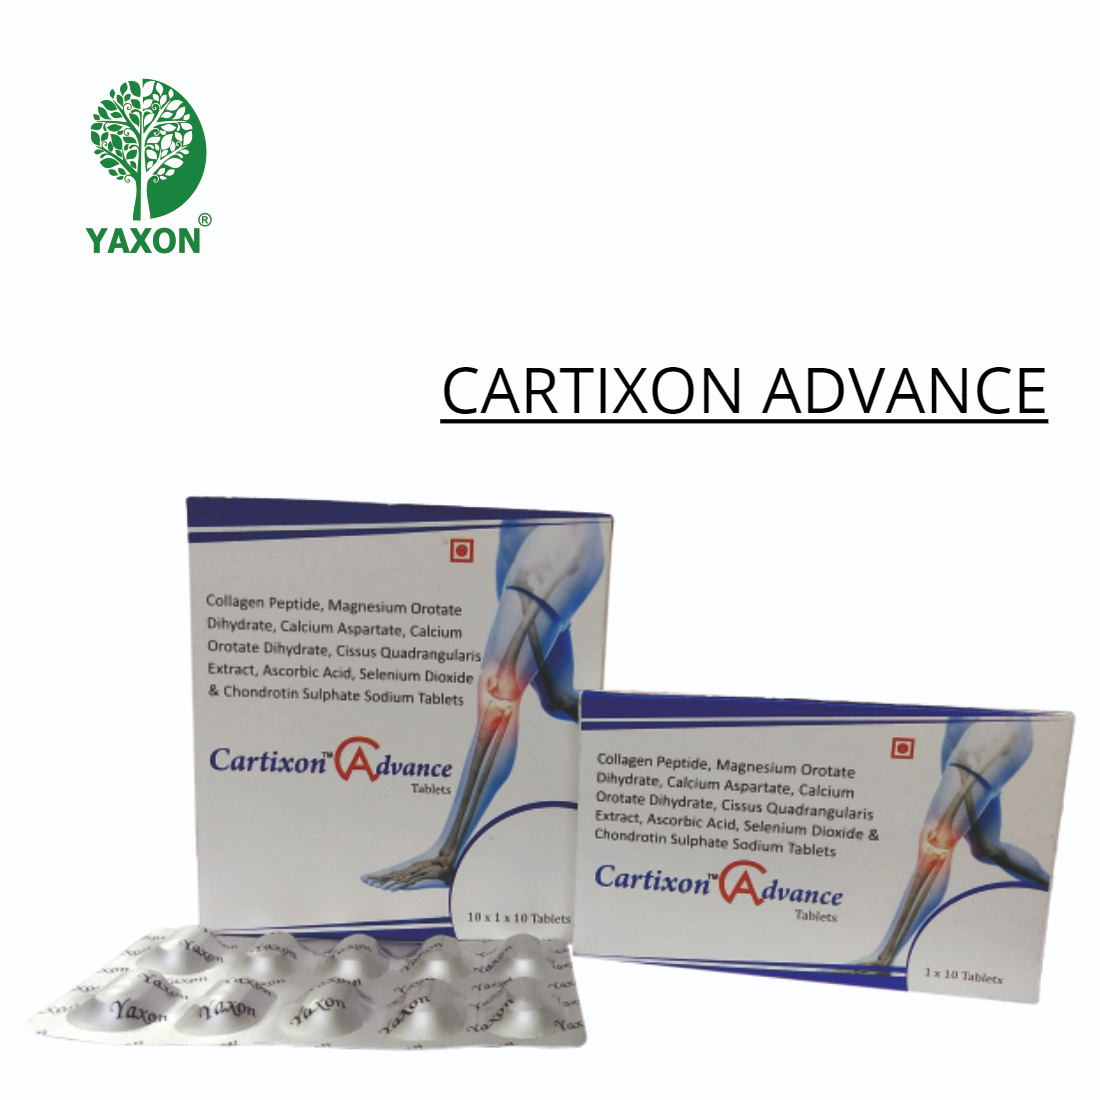 YAXON CARTIXON ADVANCE Tablets